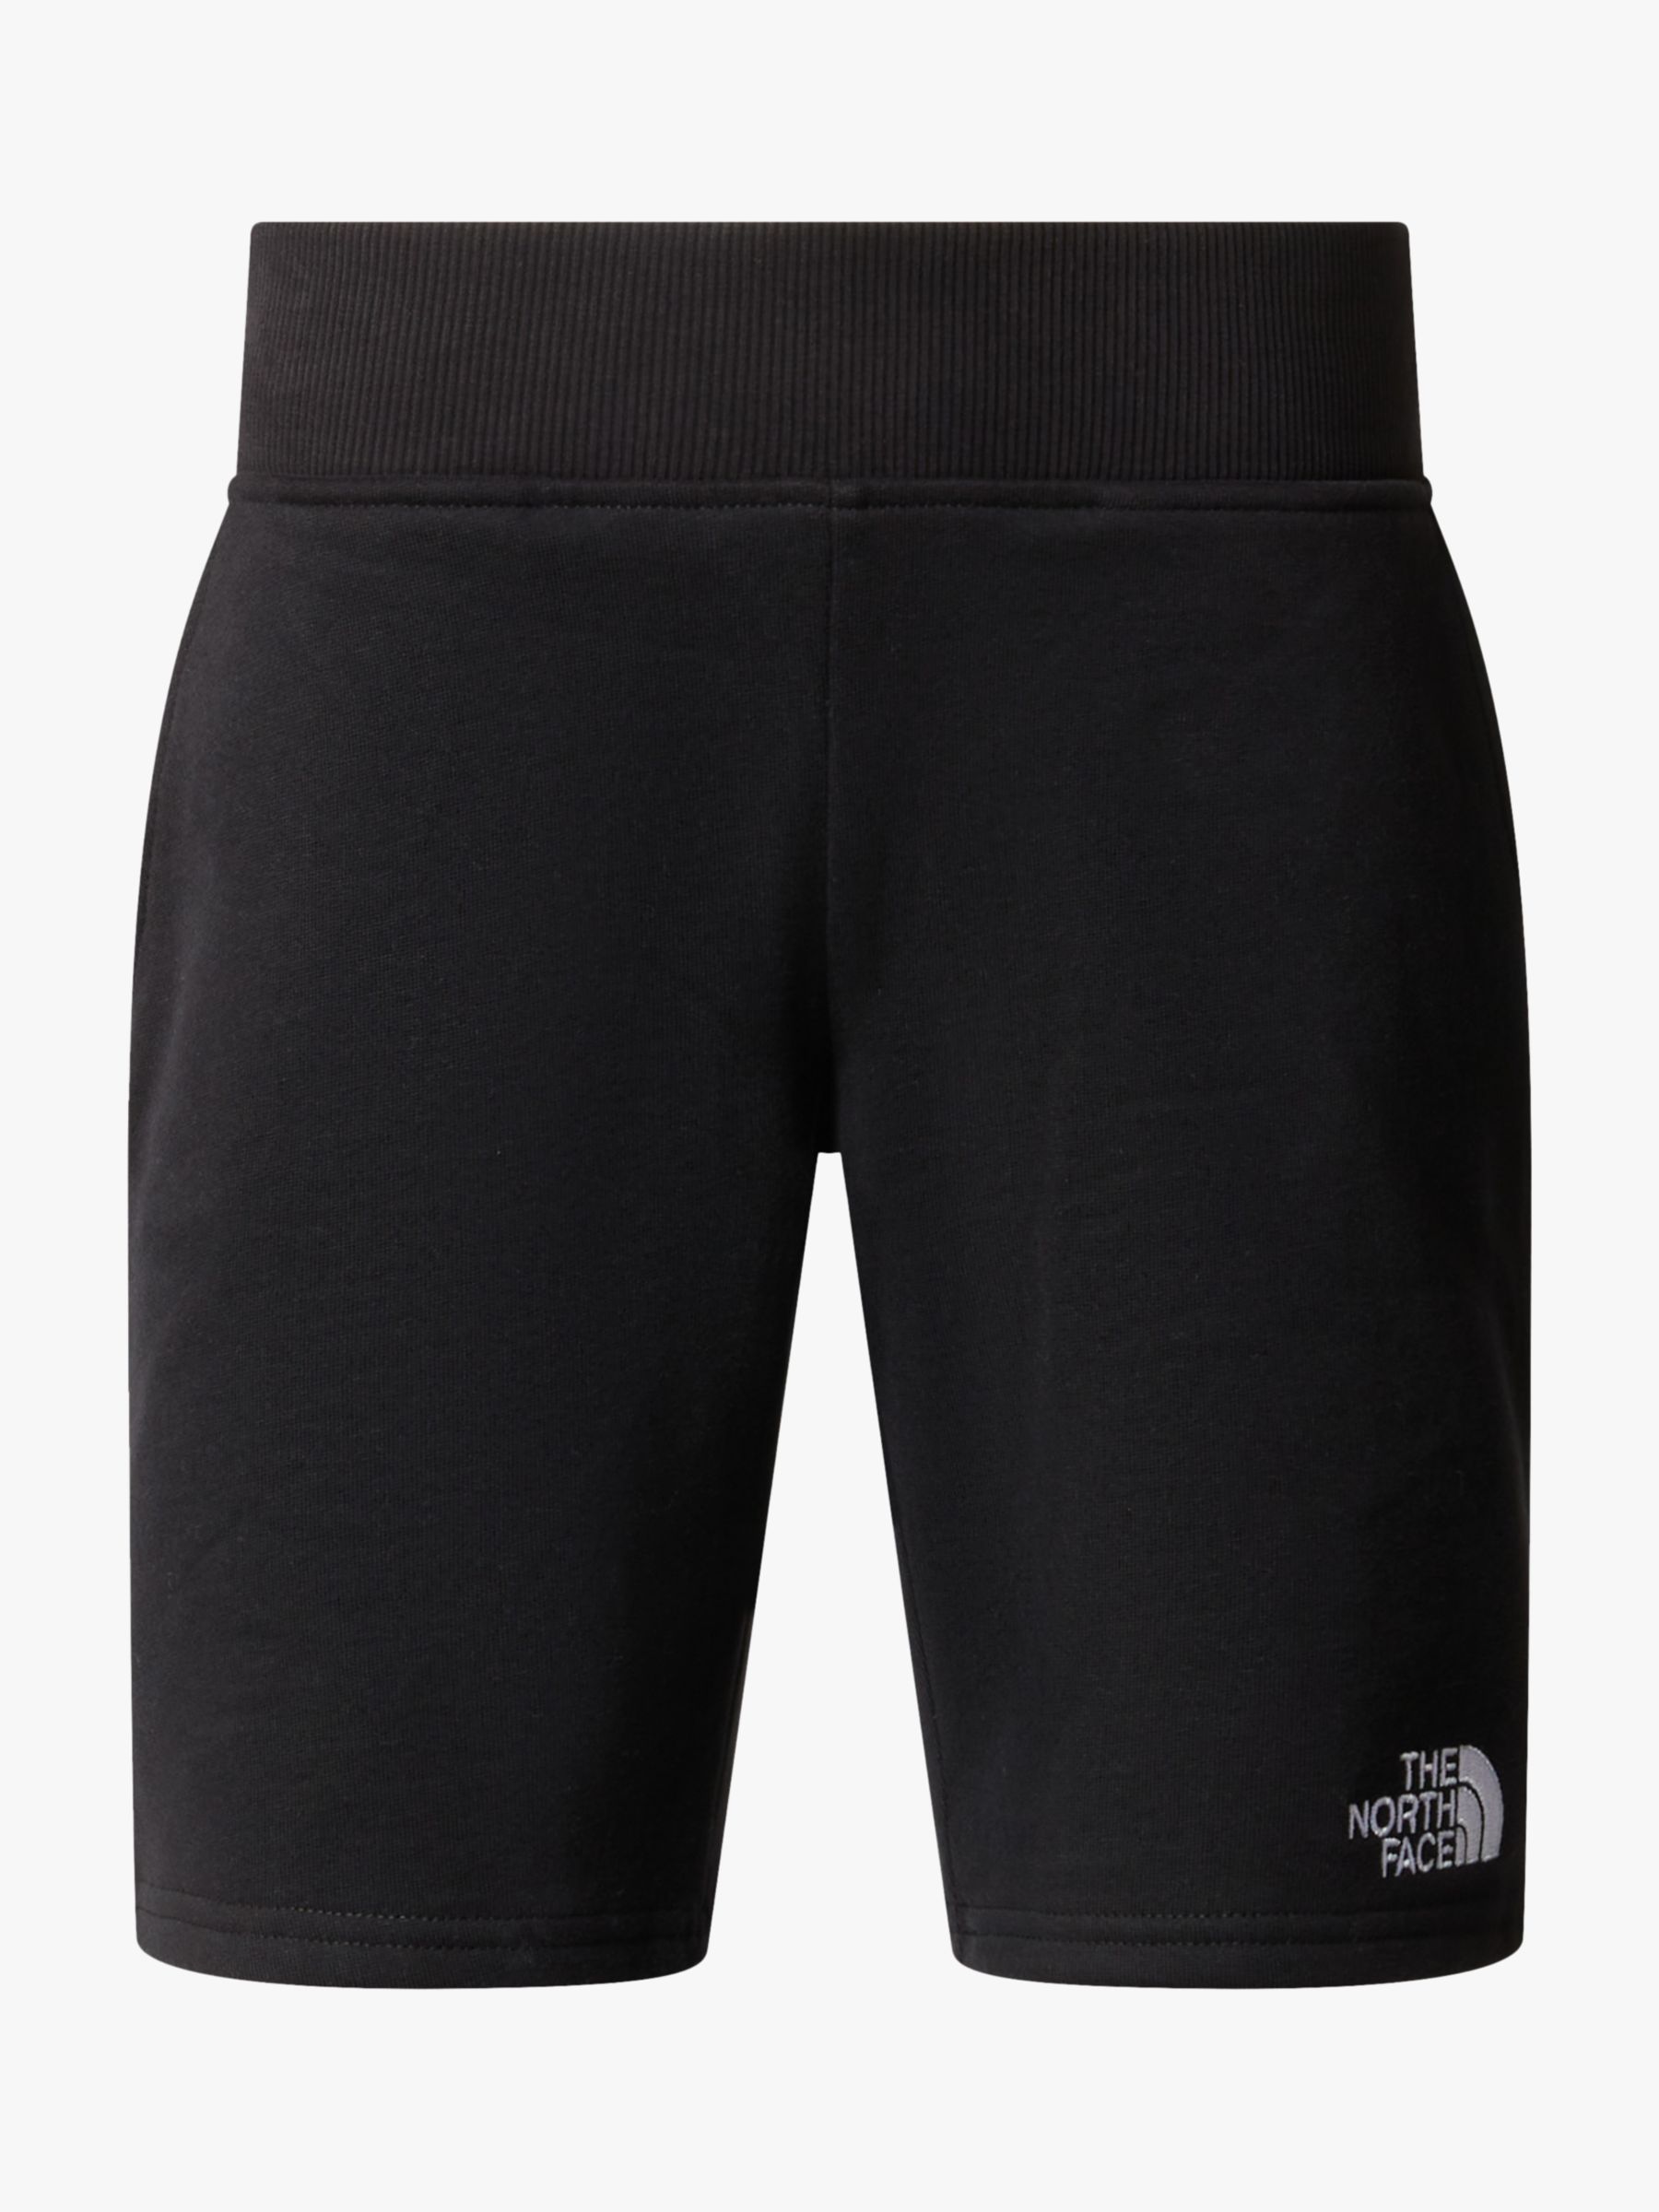 The North Face Kids' Logo Cotton Shorts, Black, M